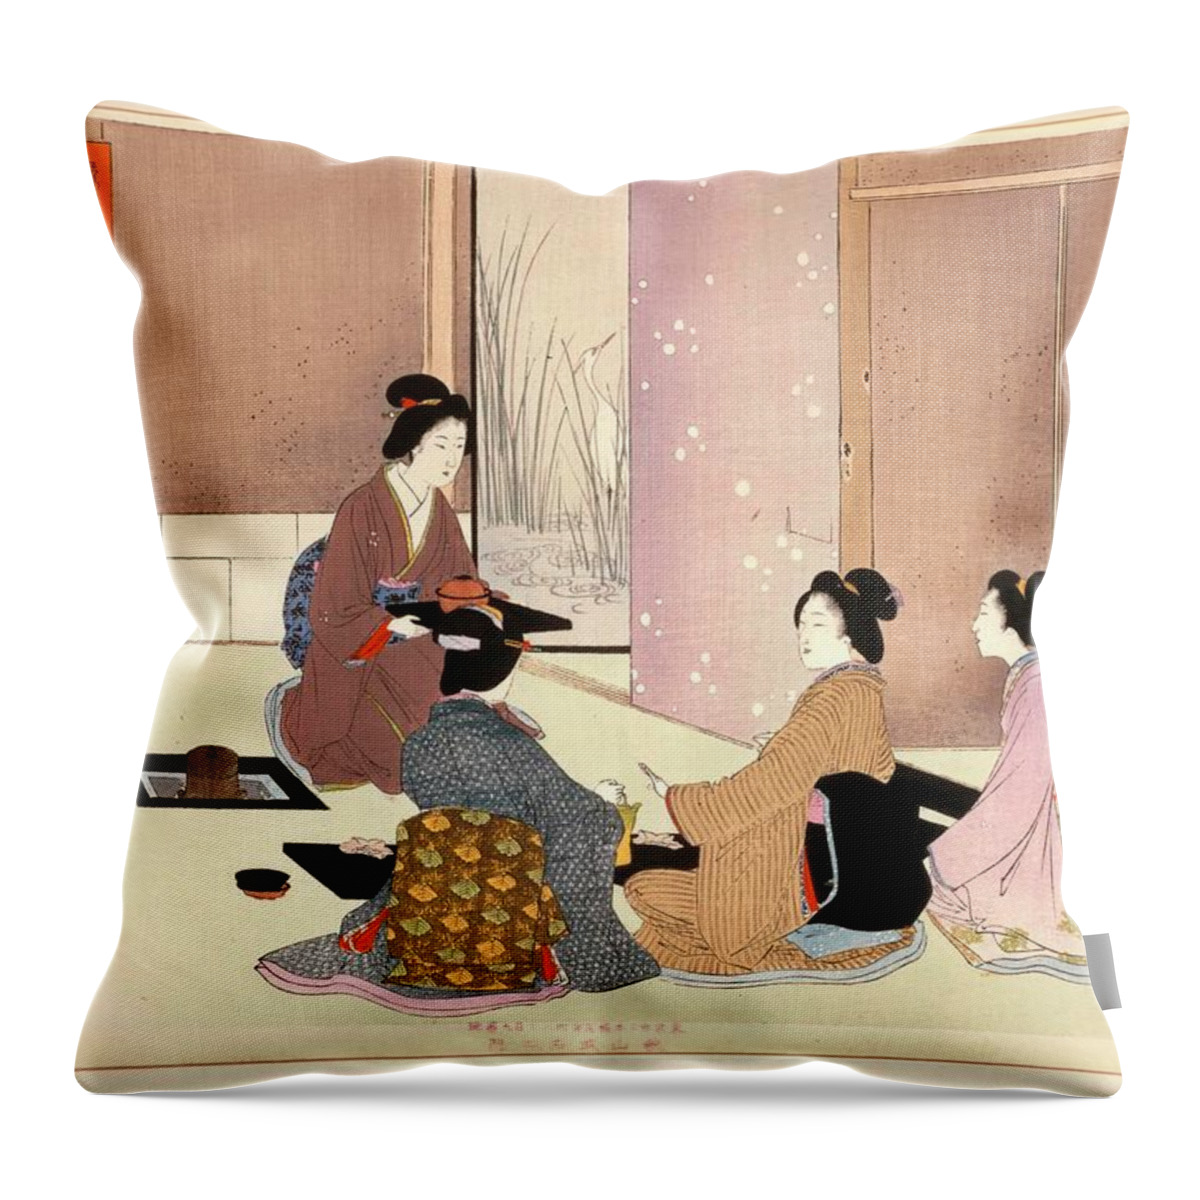 Toshikata Throw Pillow featuring the drawing Japanese Tea Ceremony, 19th century. by Mizuno Toshikata -1866-1908-